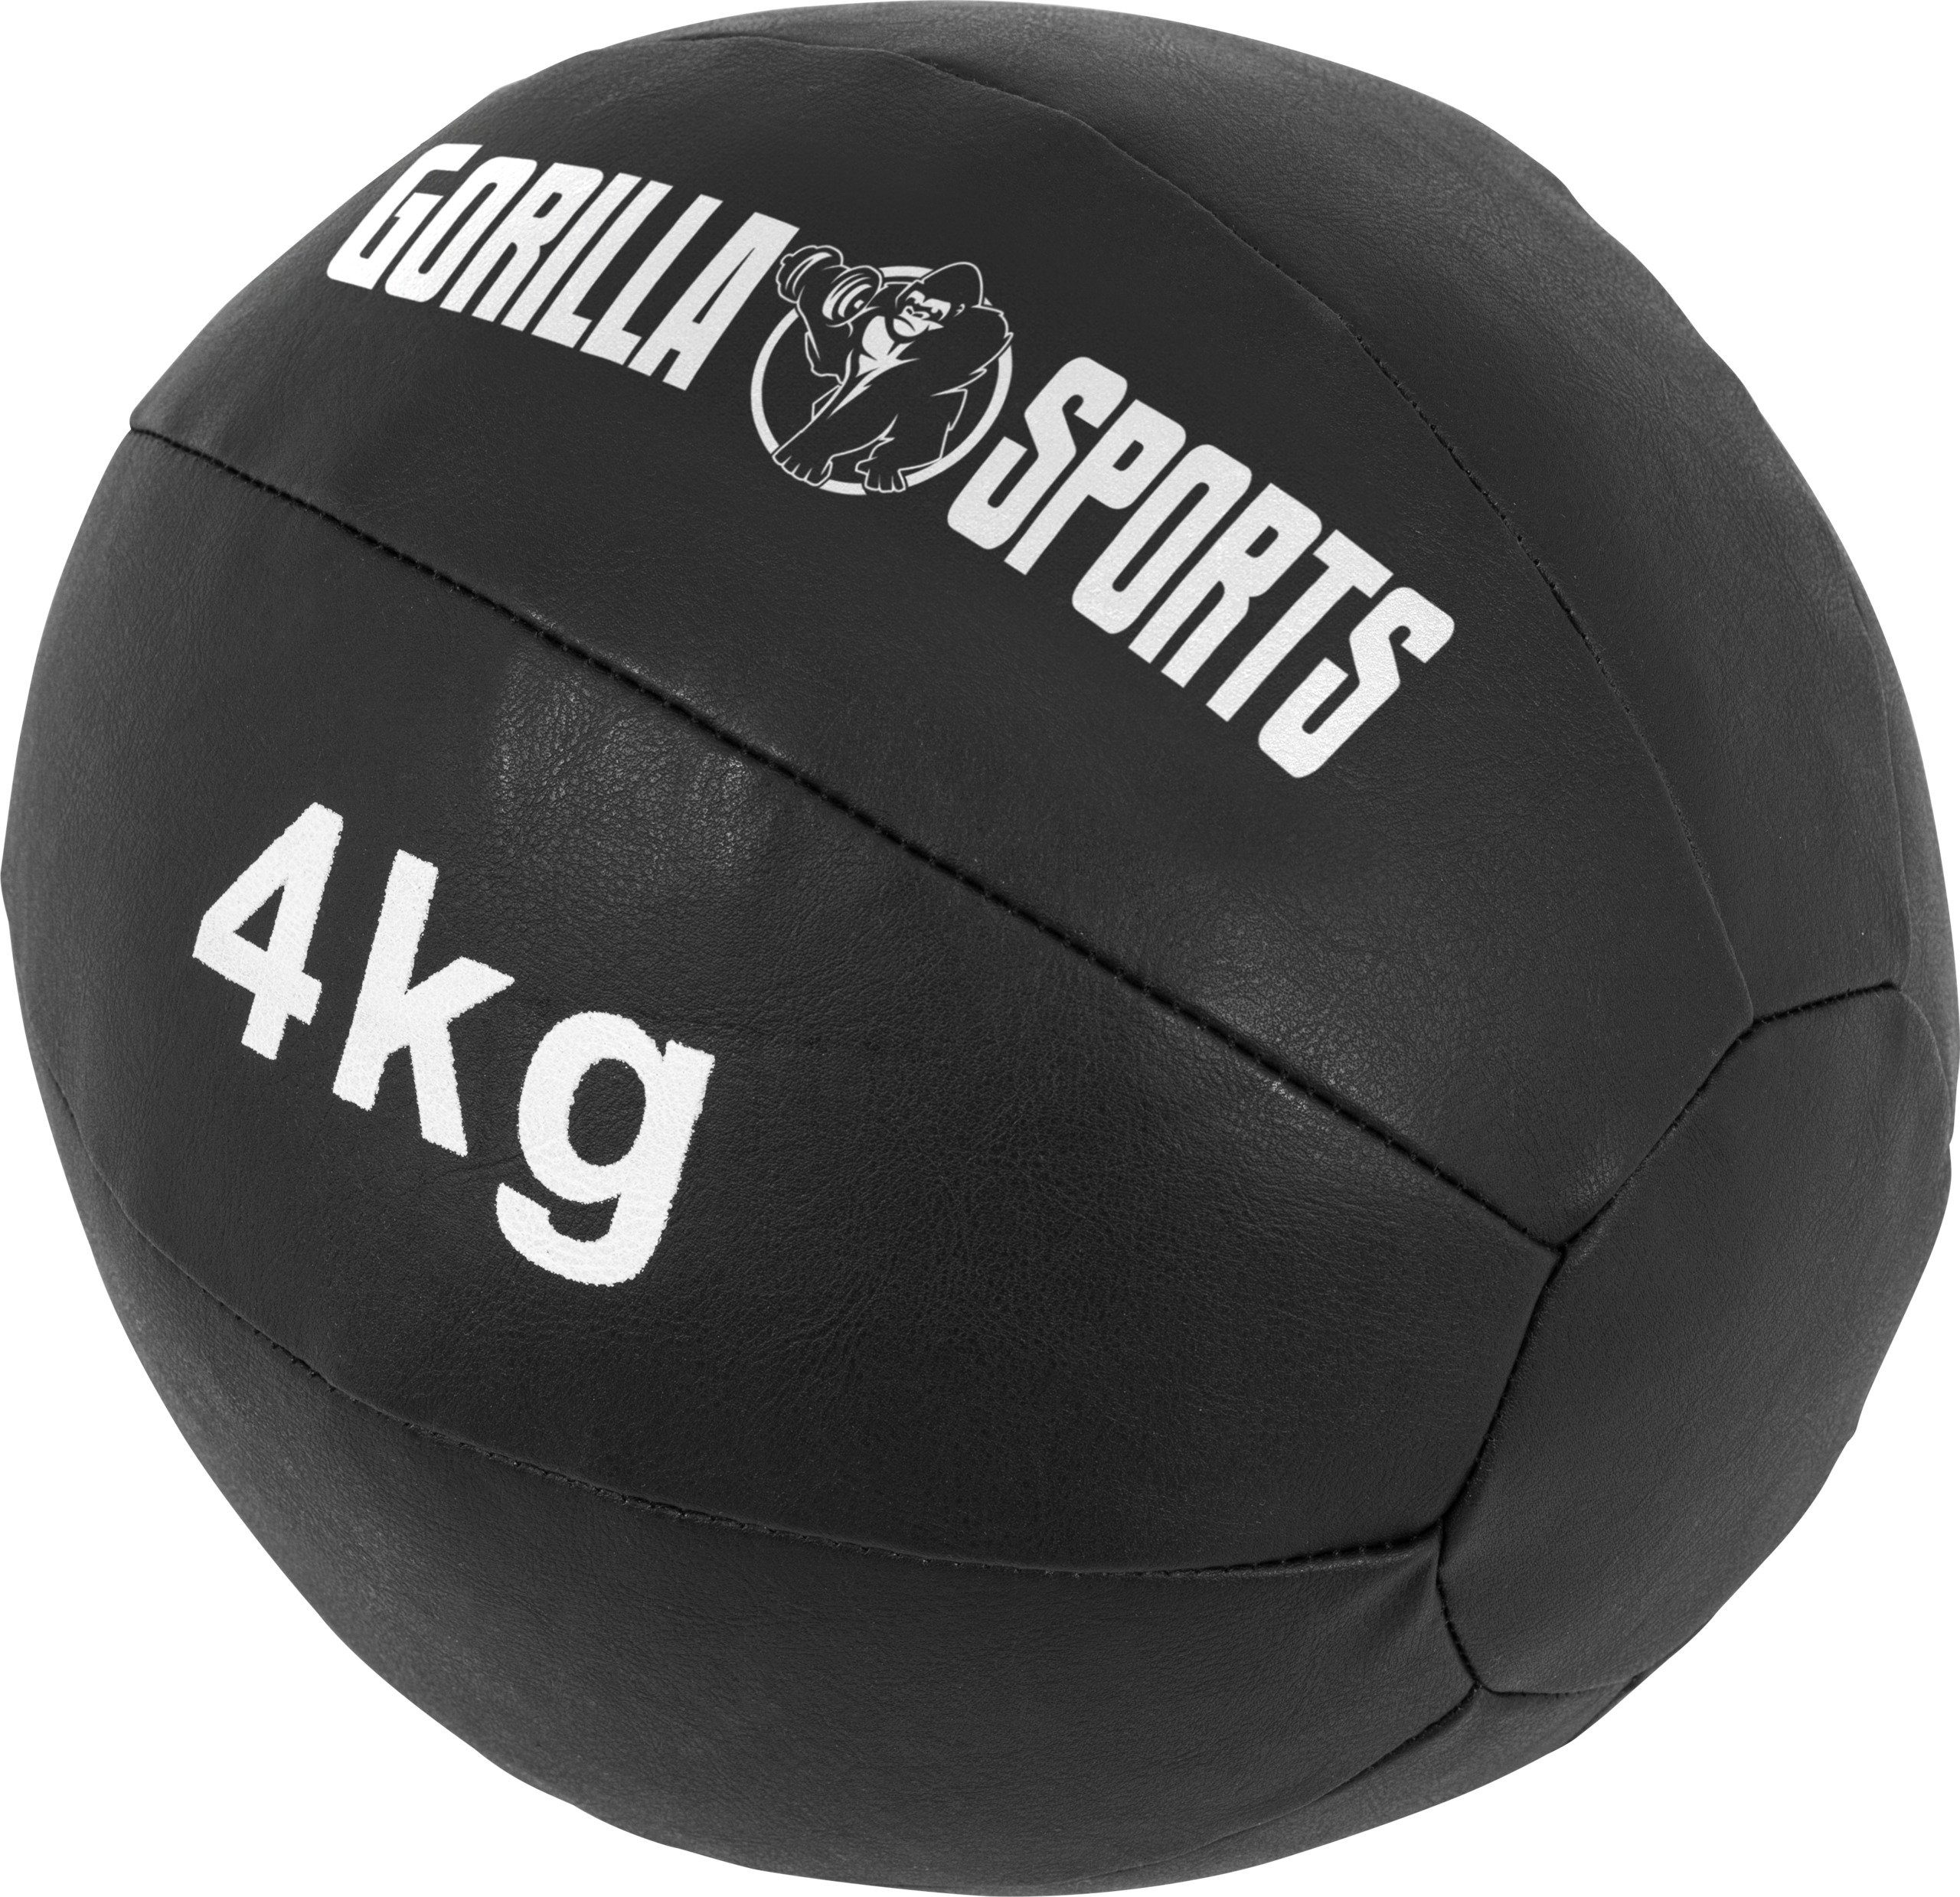 4 SPORTS Gewichtsball Leder, Einzeln/Set, aus Trainingsball, GORILLA 29cm, kg Medizinball Fitnessball,